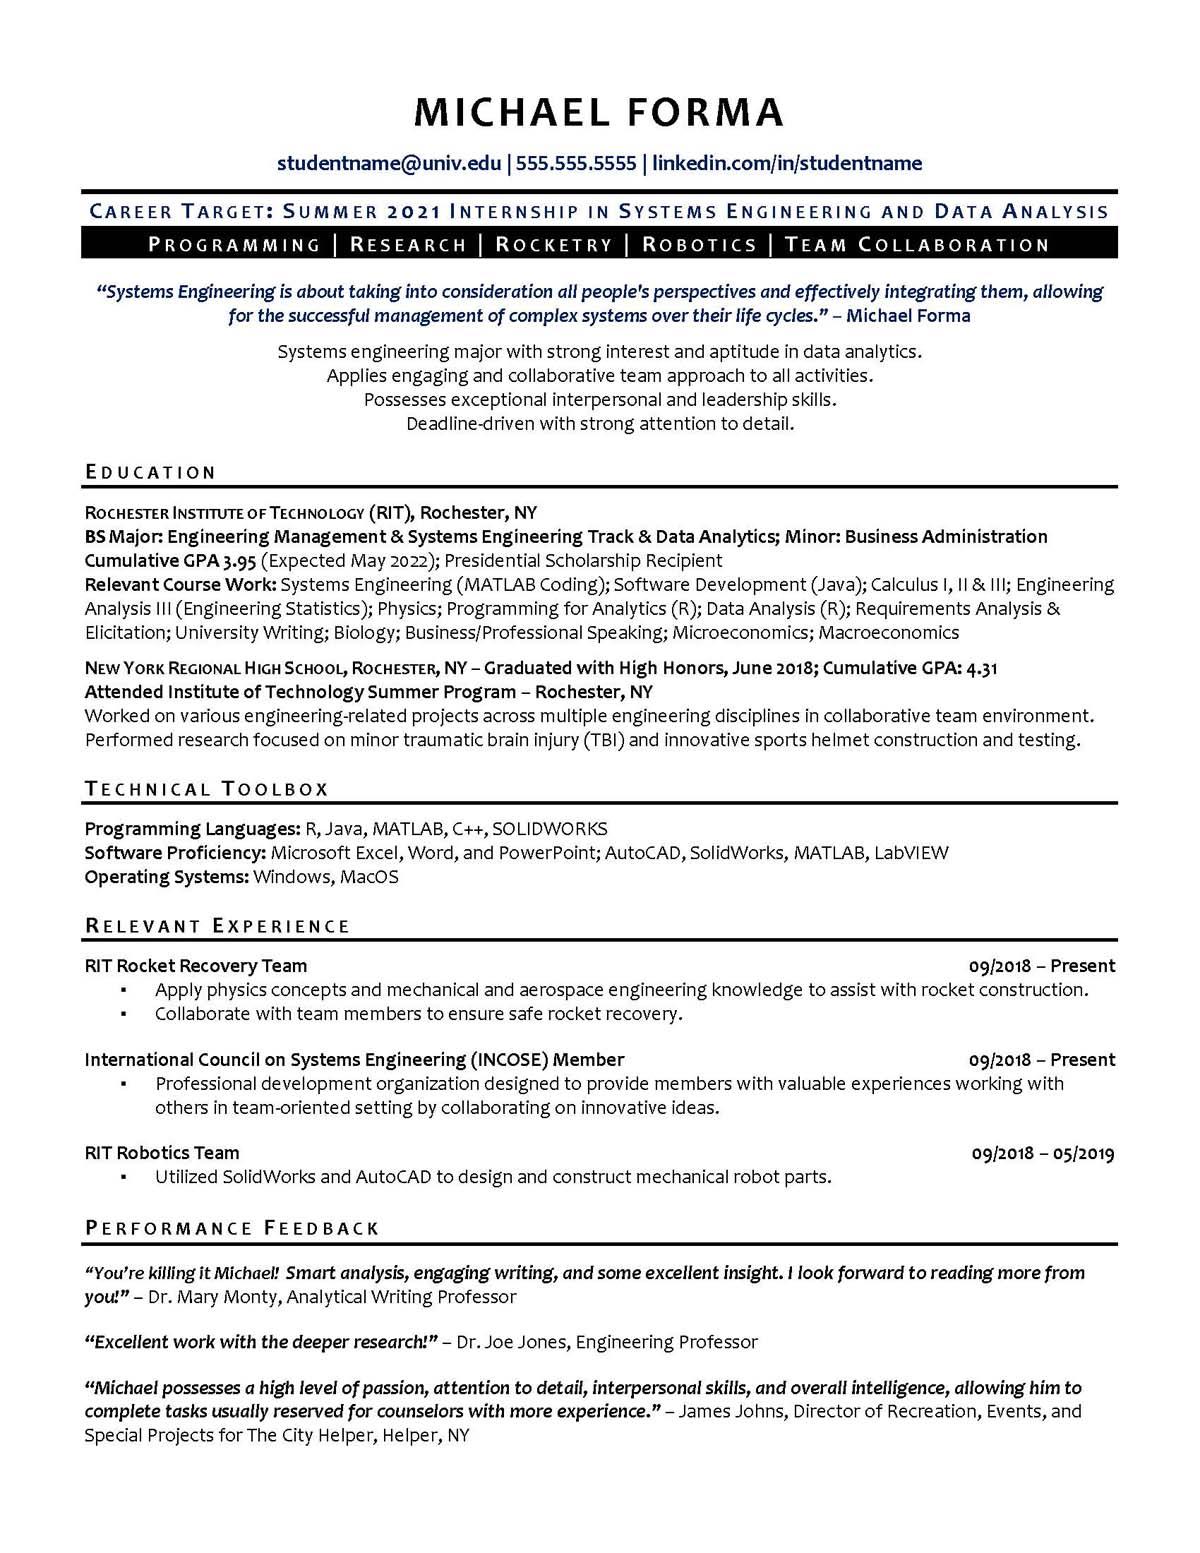 Sample resume: Engineering, Entry Level, Functional